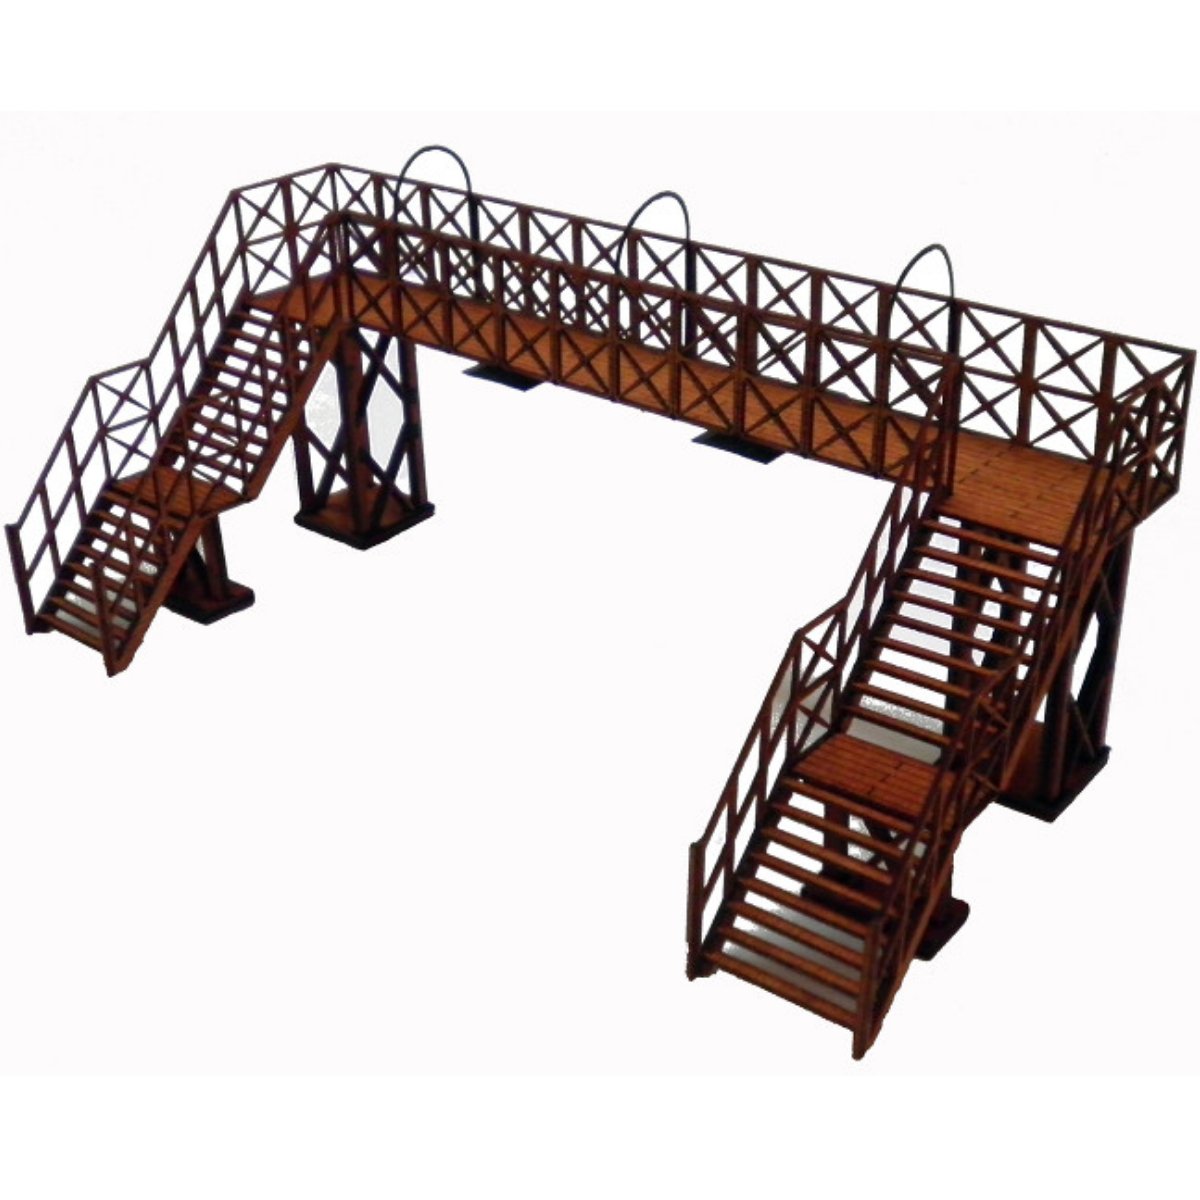 Ancorton Models Platform Footbridge Kit - Double Track (OO Gauge) - Phillips Hobbies